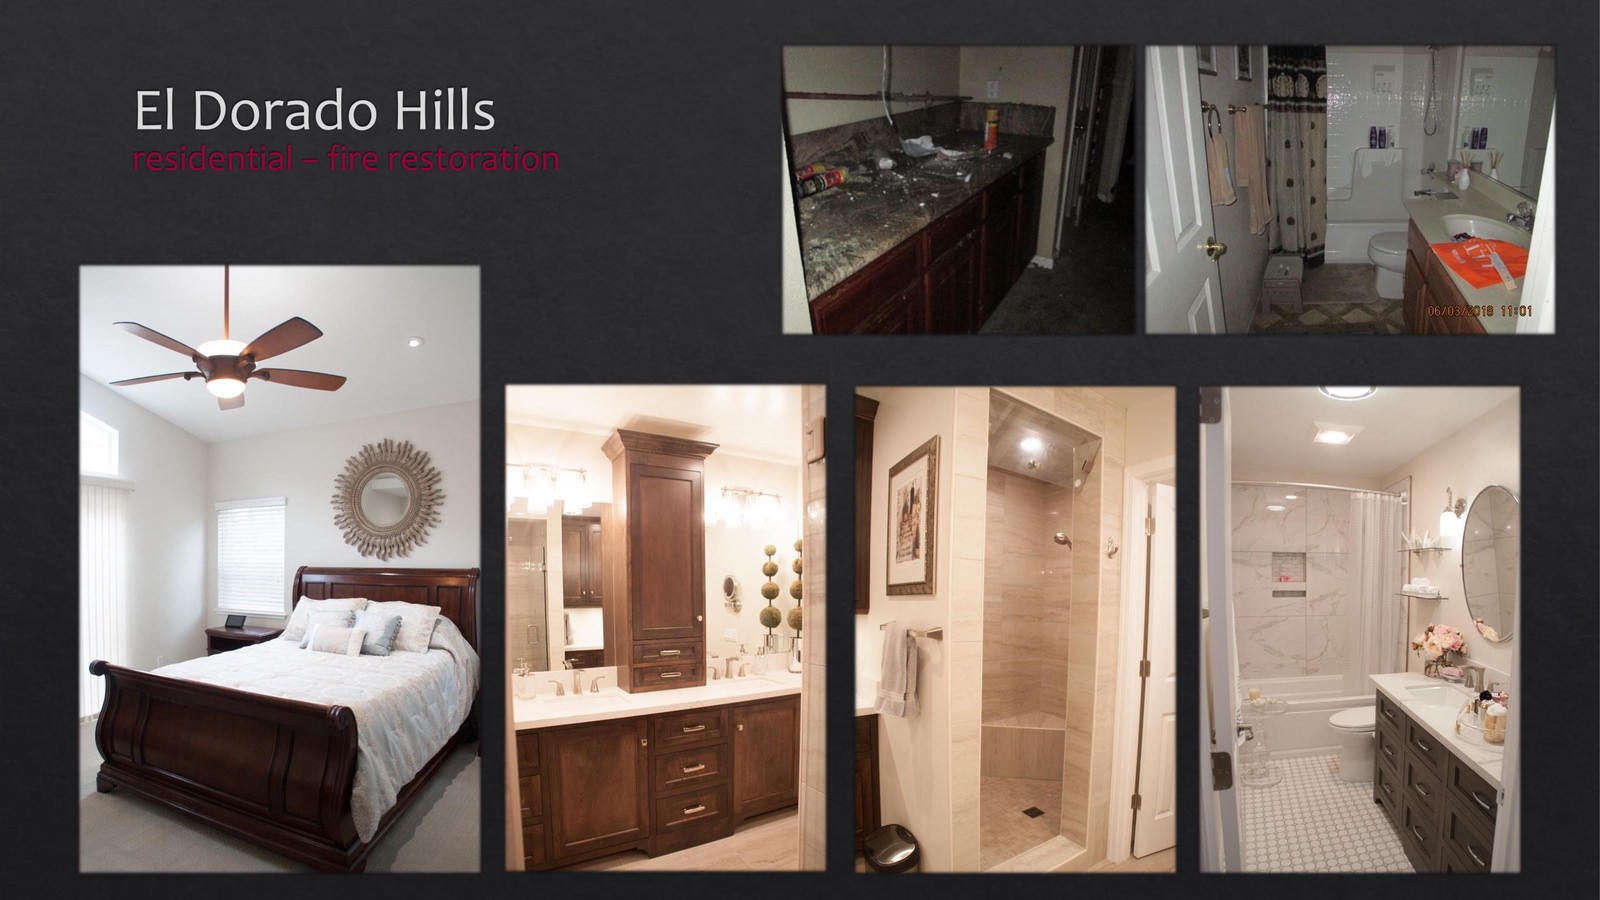 El Dorado Hills Residential fire restoration - bathroom and bedroom